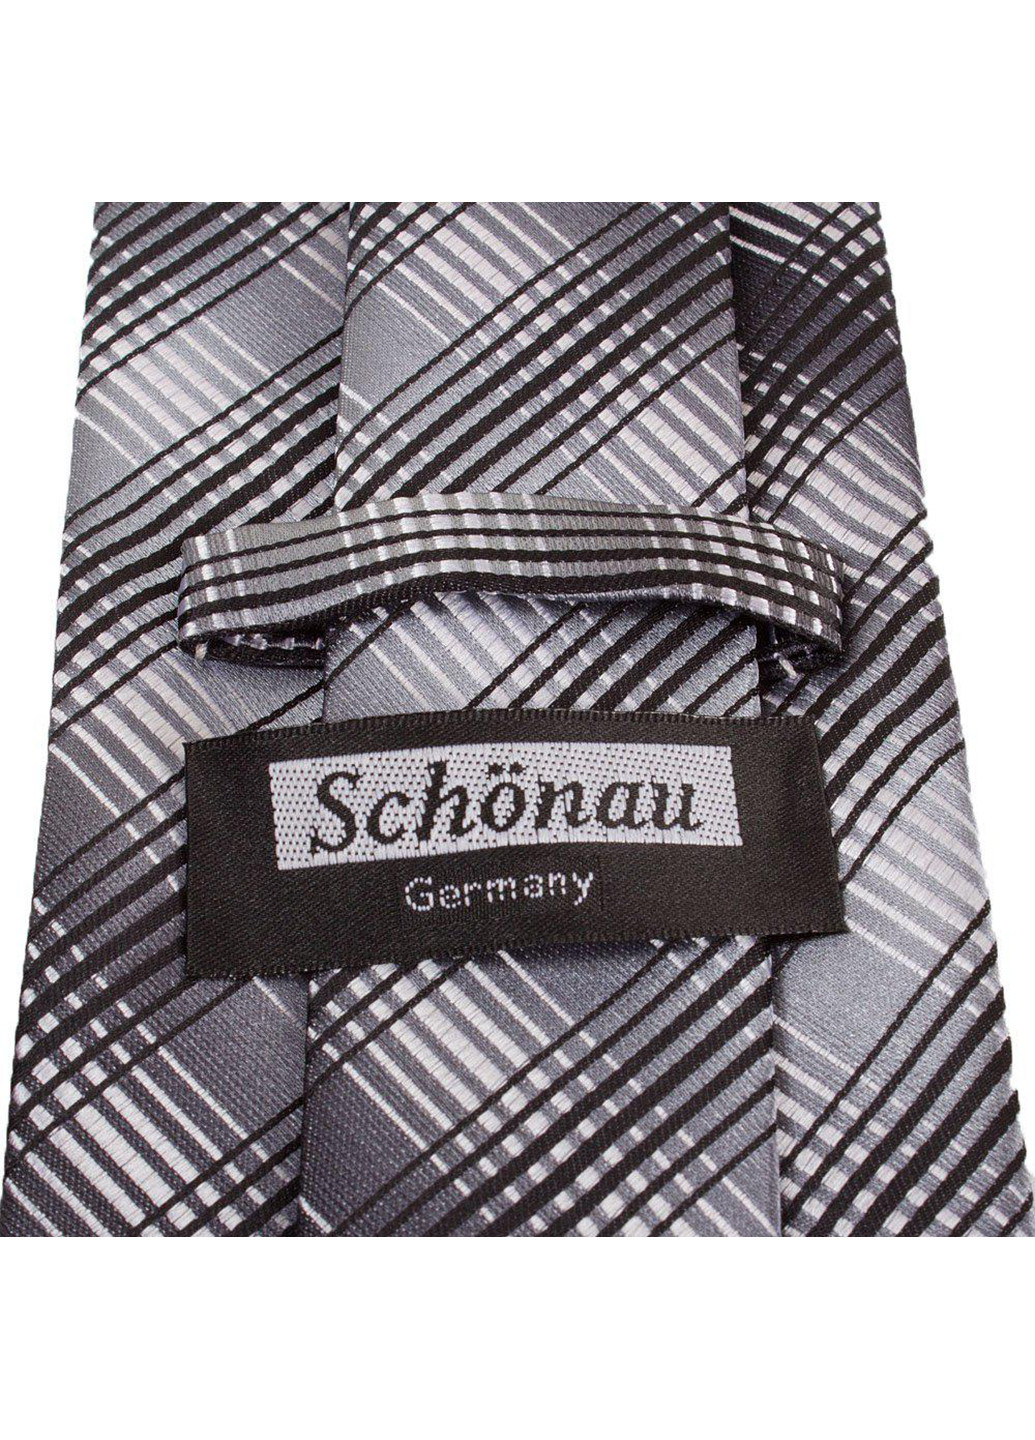 Мужской галстук 149 см Schonau & Houcken (252132882)